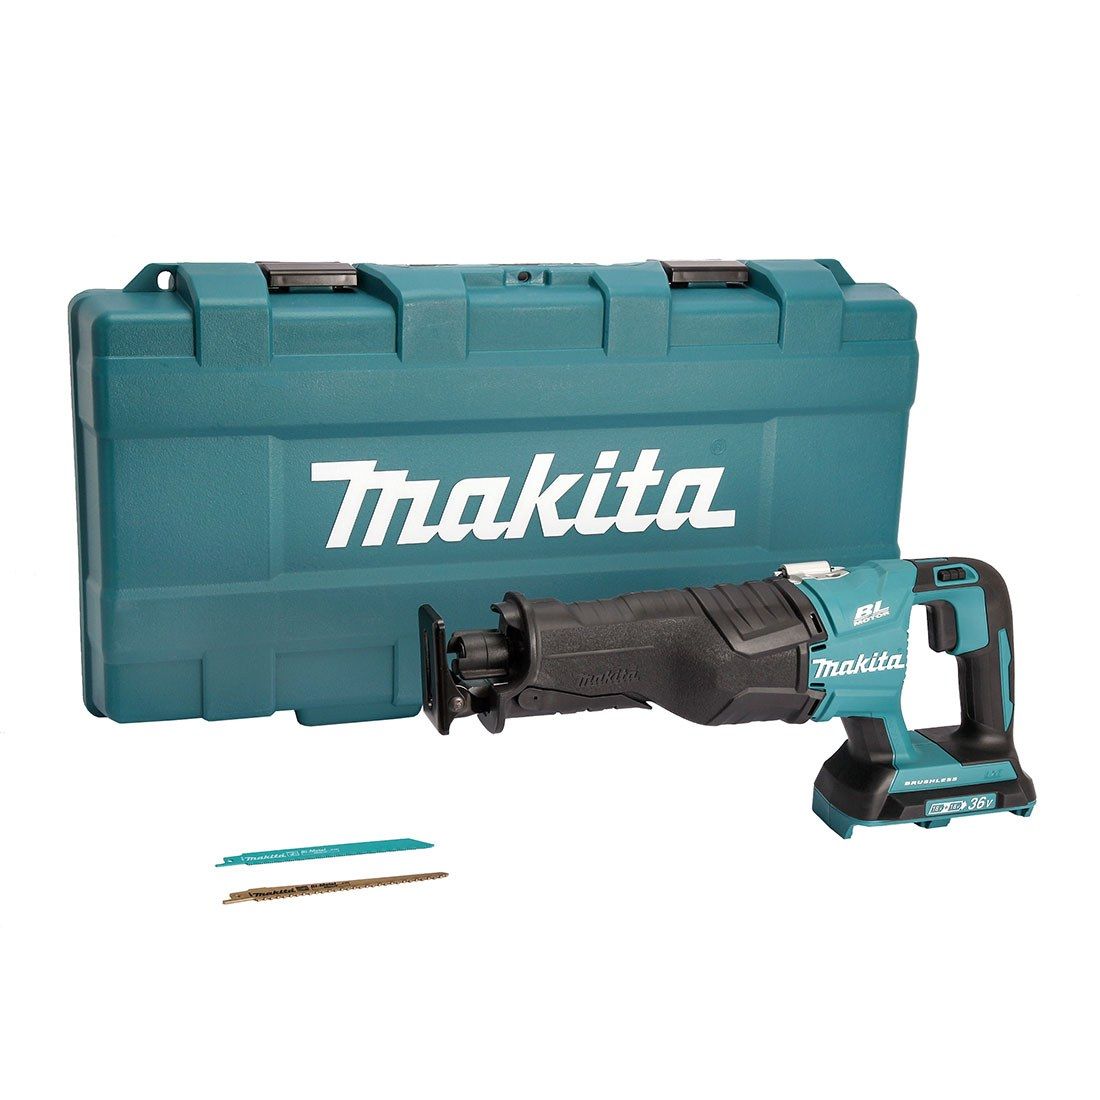 Makita 18V + 18V Cordless Brushless Recipro Saw DJR360ZK Power Tool Services